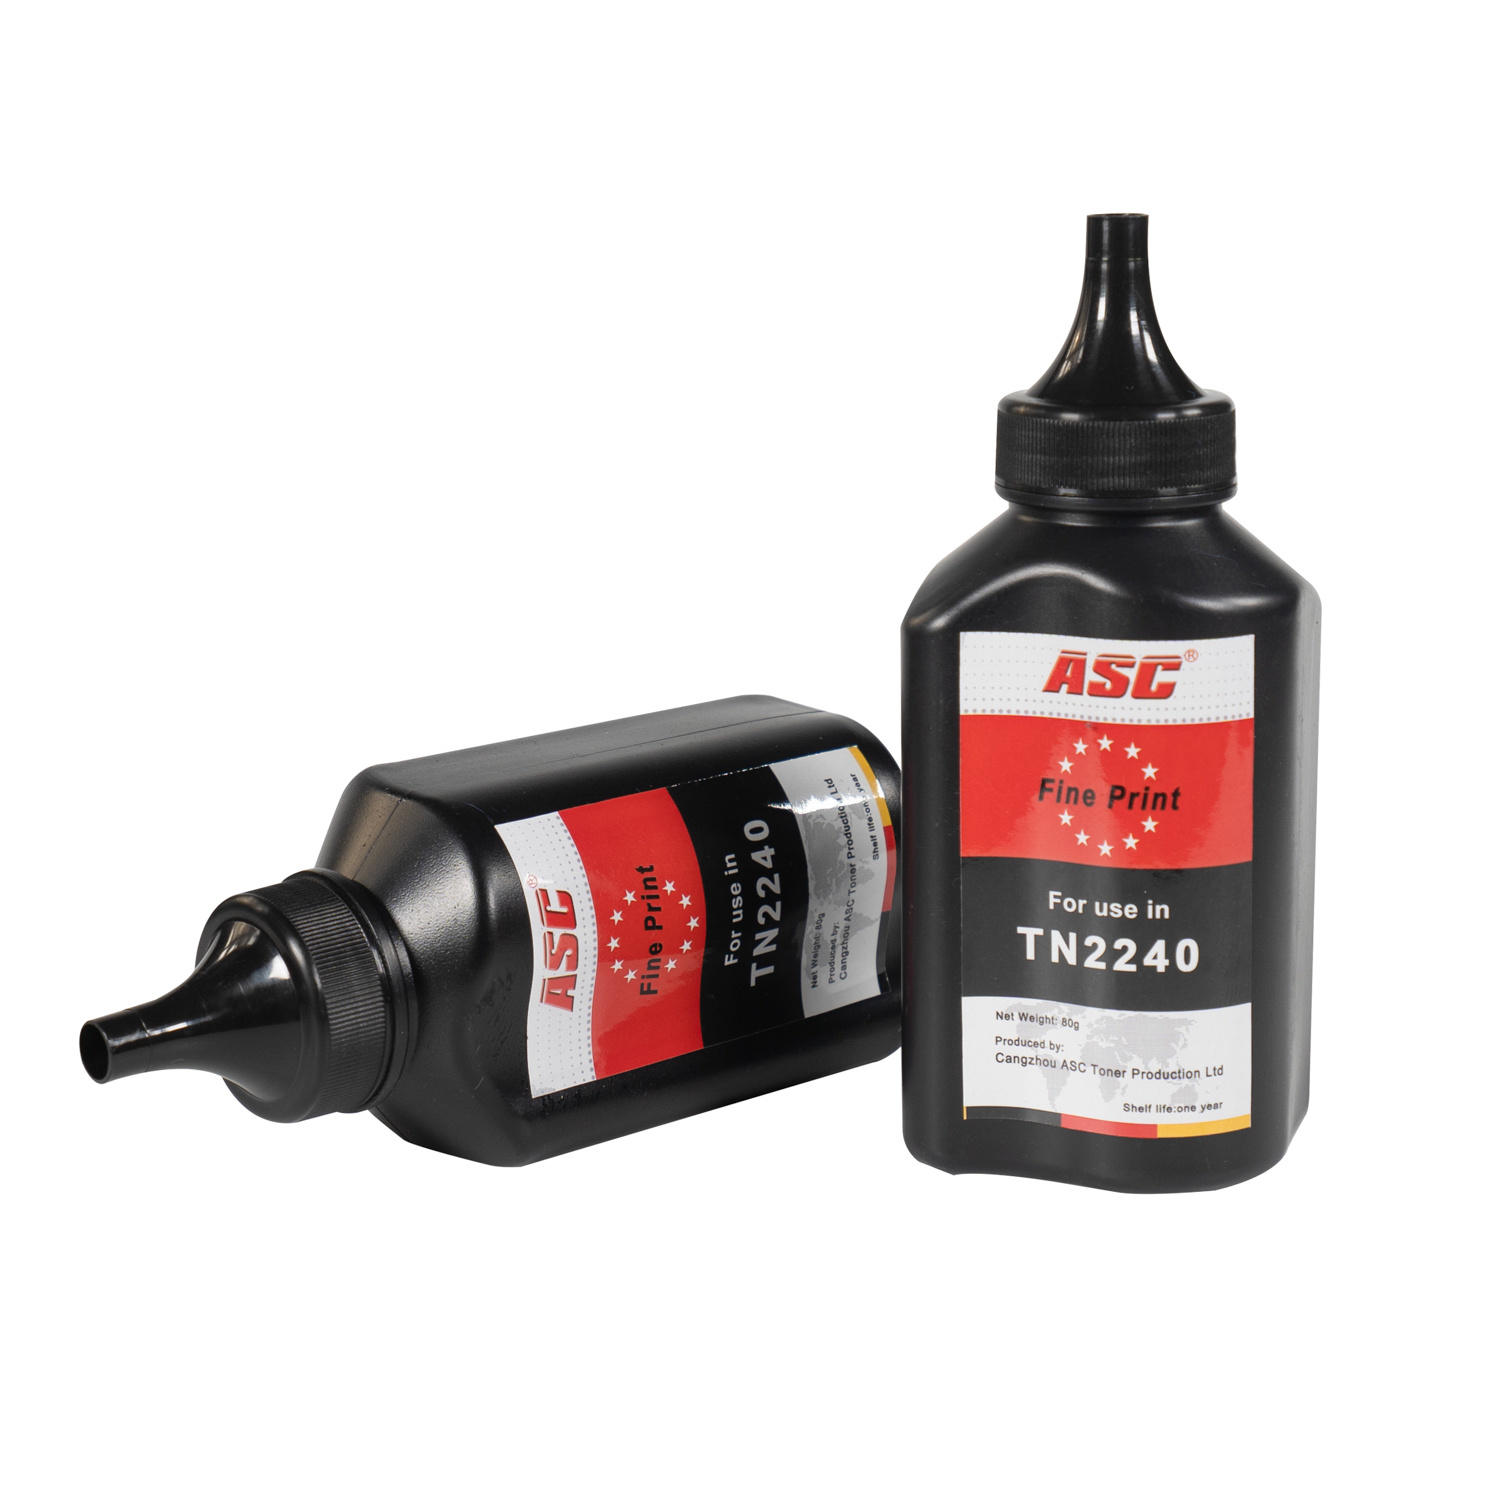 cheap photocopier bottle toner tn240 refill toner from asc china toner manufacturers 